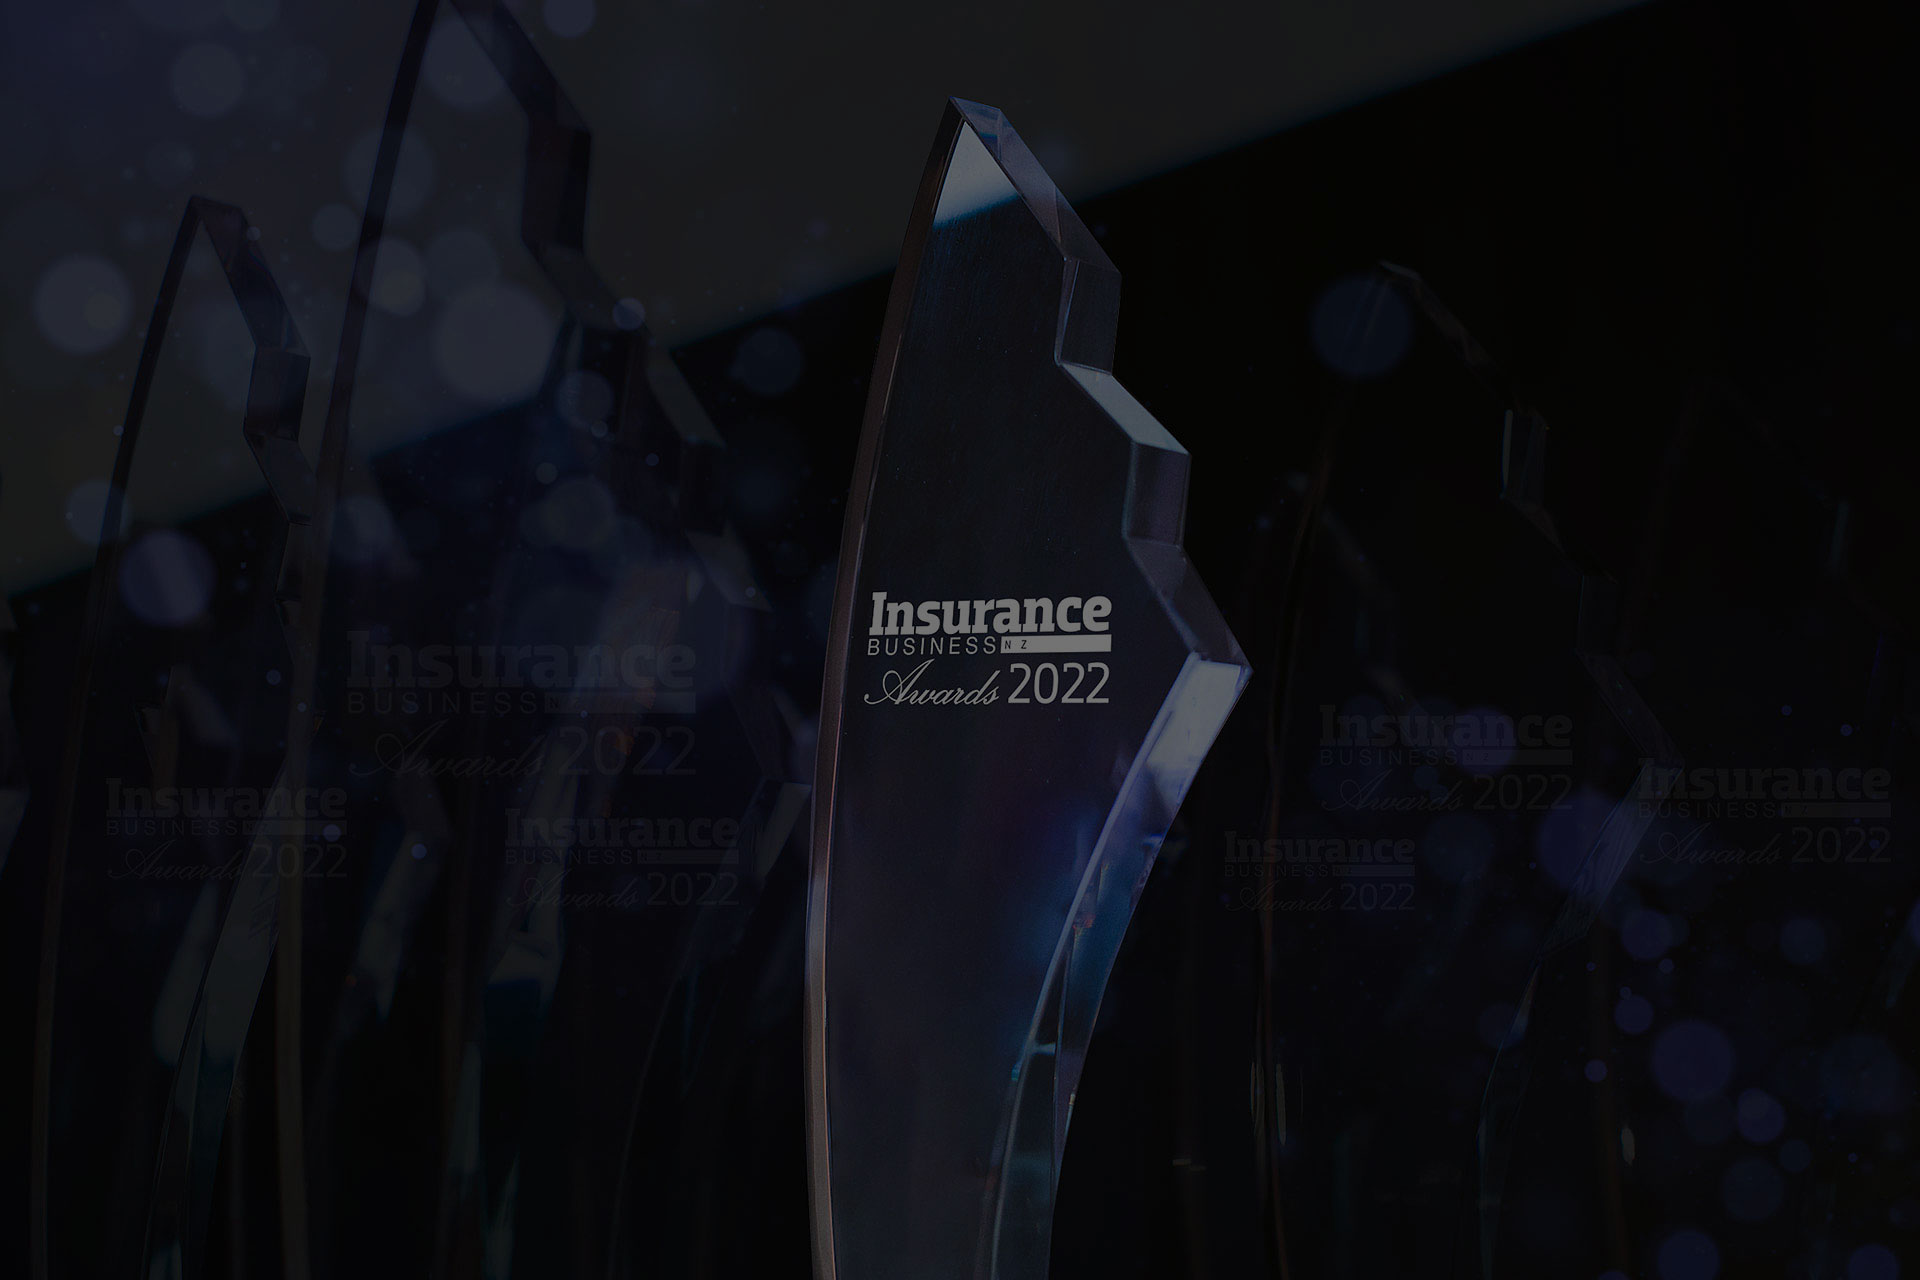 New Zealand Insurance Business Awards